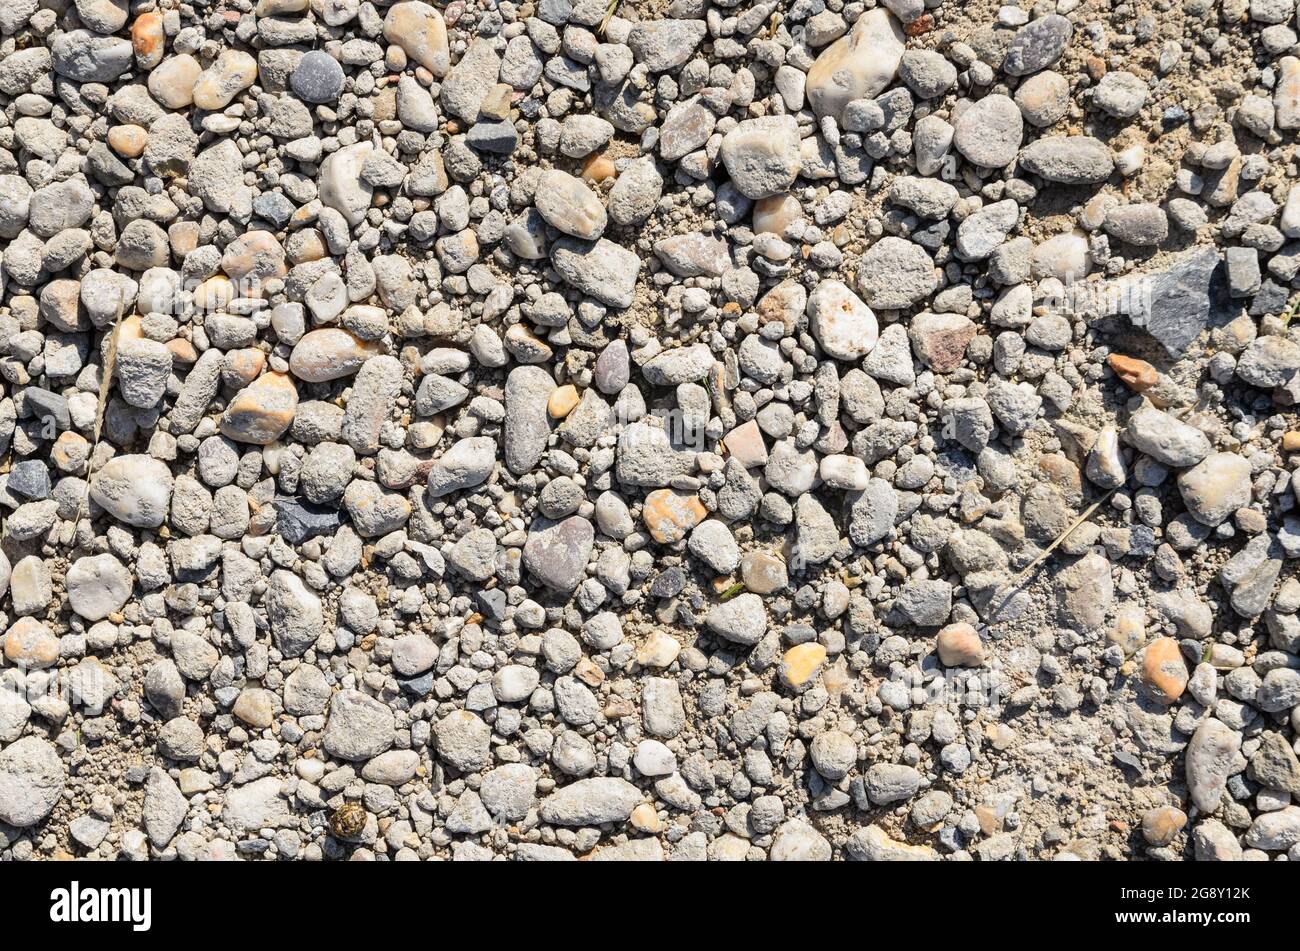 Small grey pebble stones on the ground Stock Photo